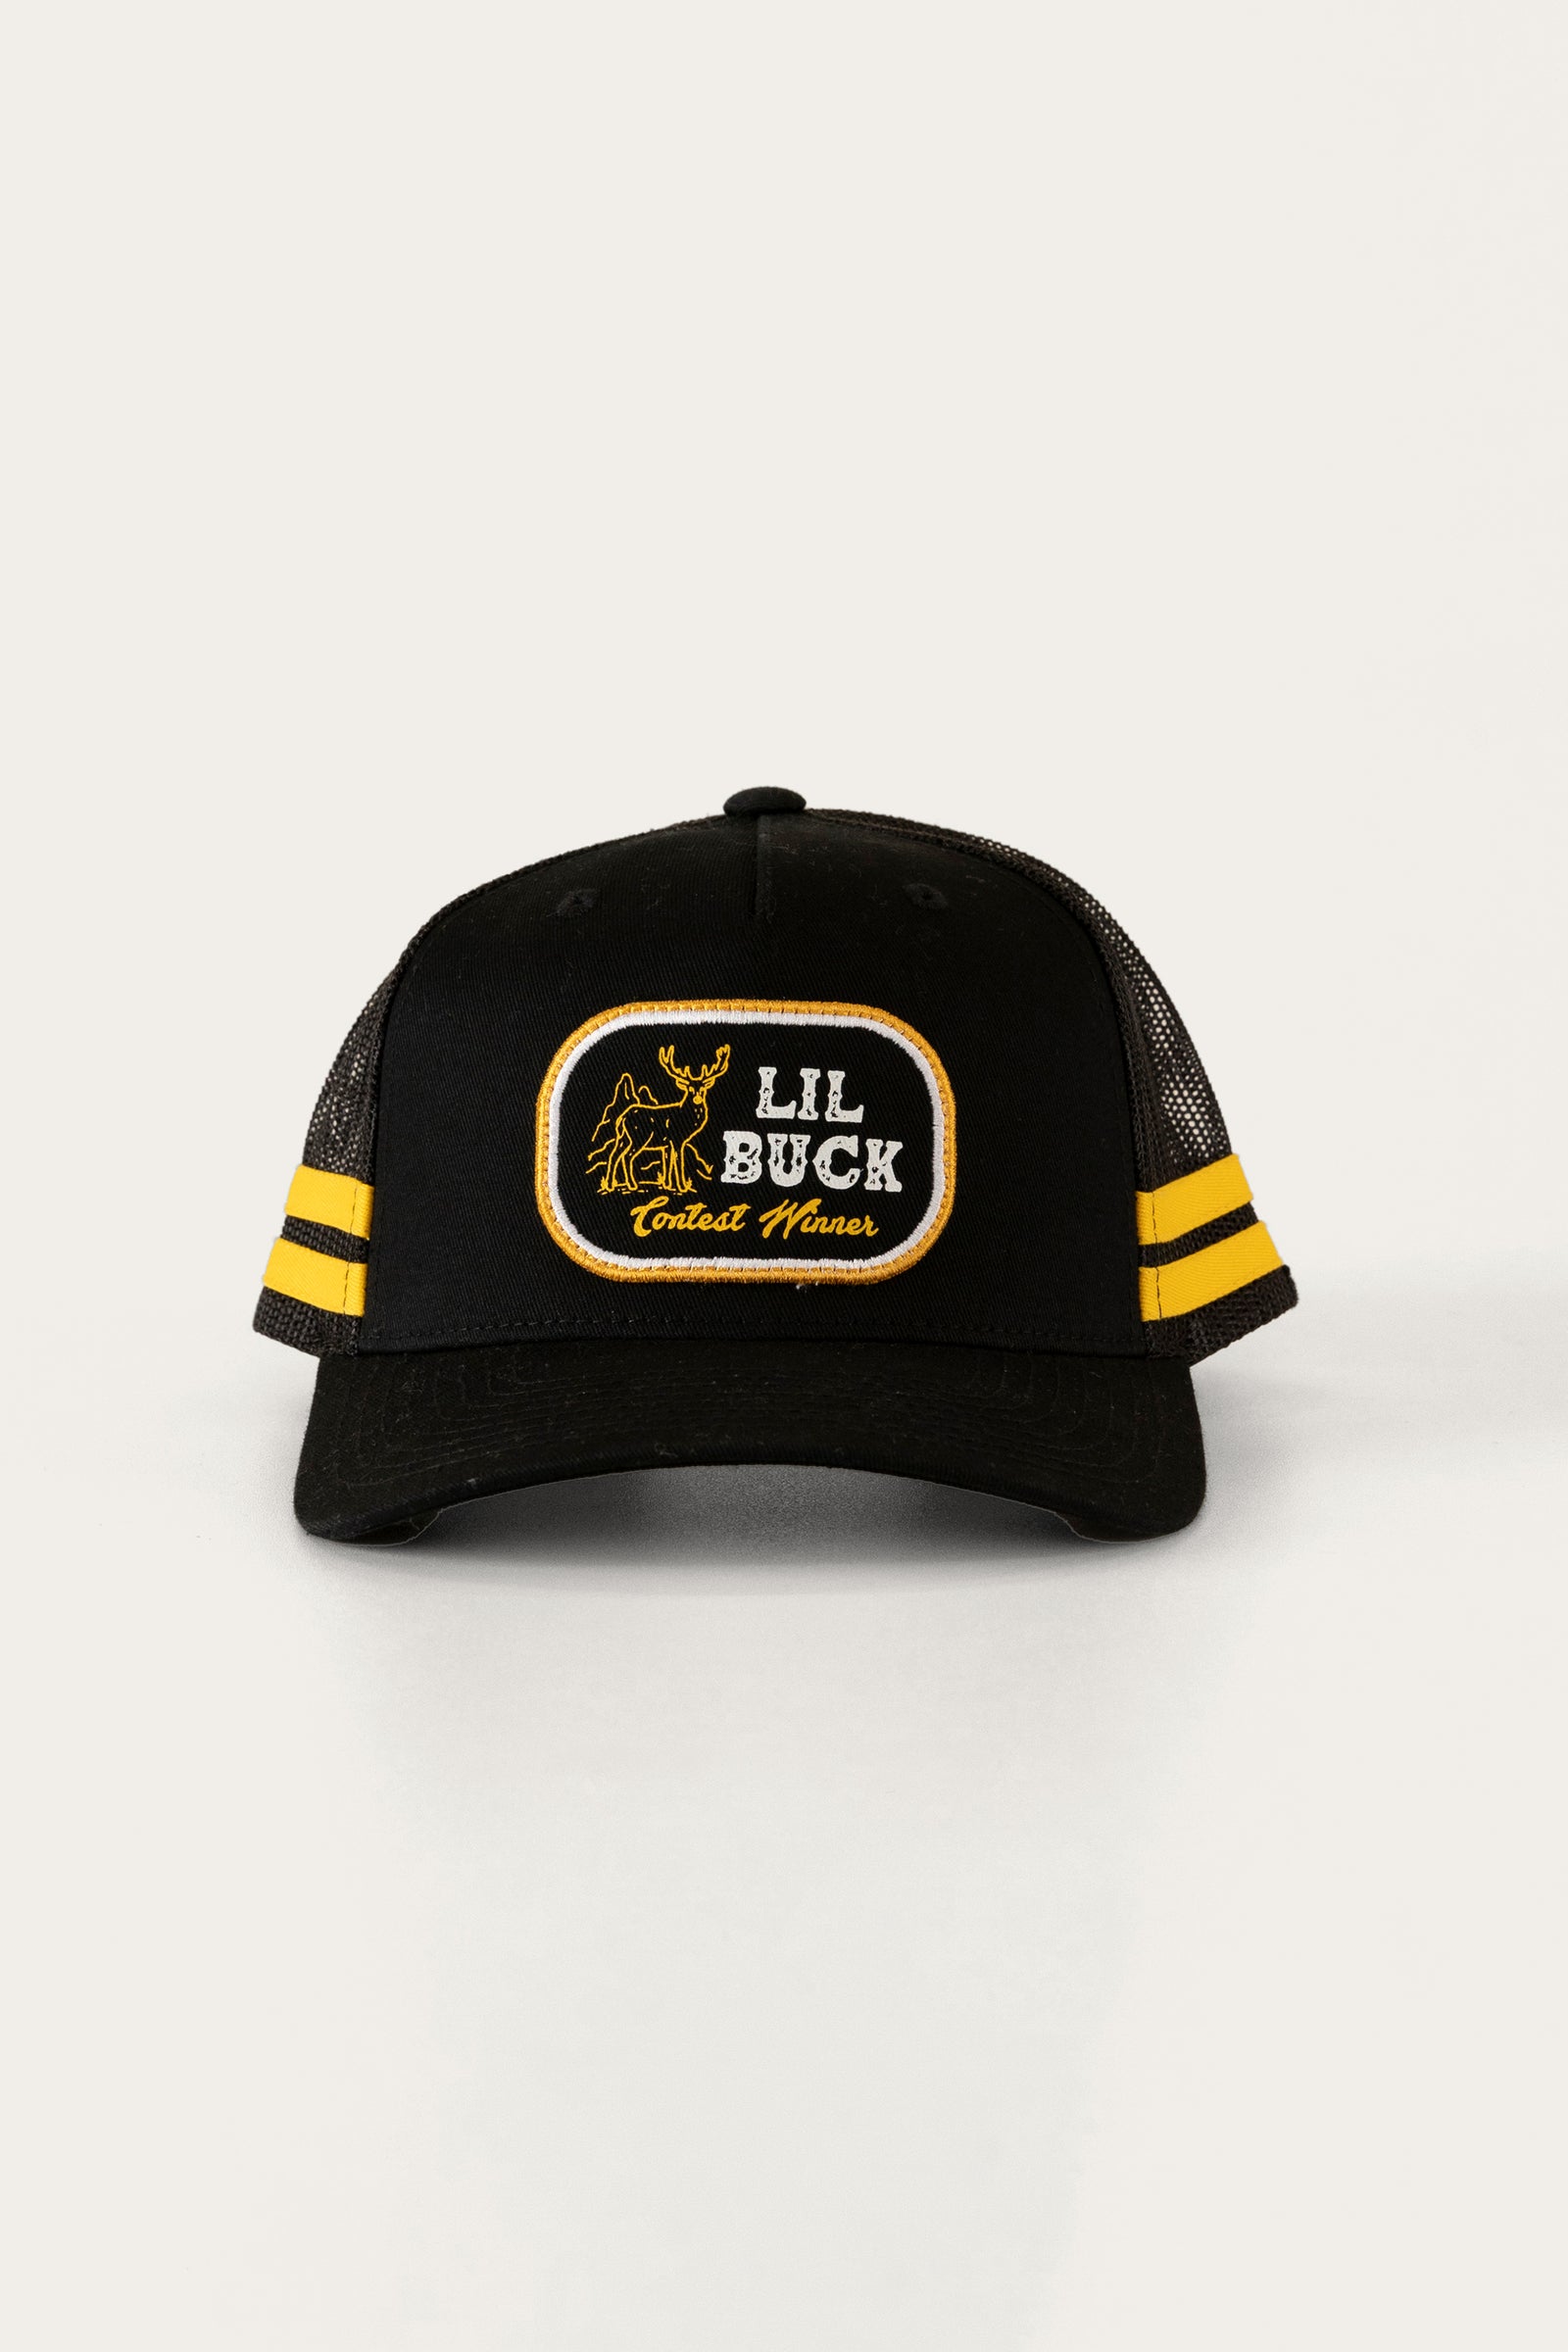 Lil Buck Kids Trucker Cap - Black